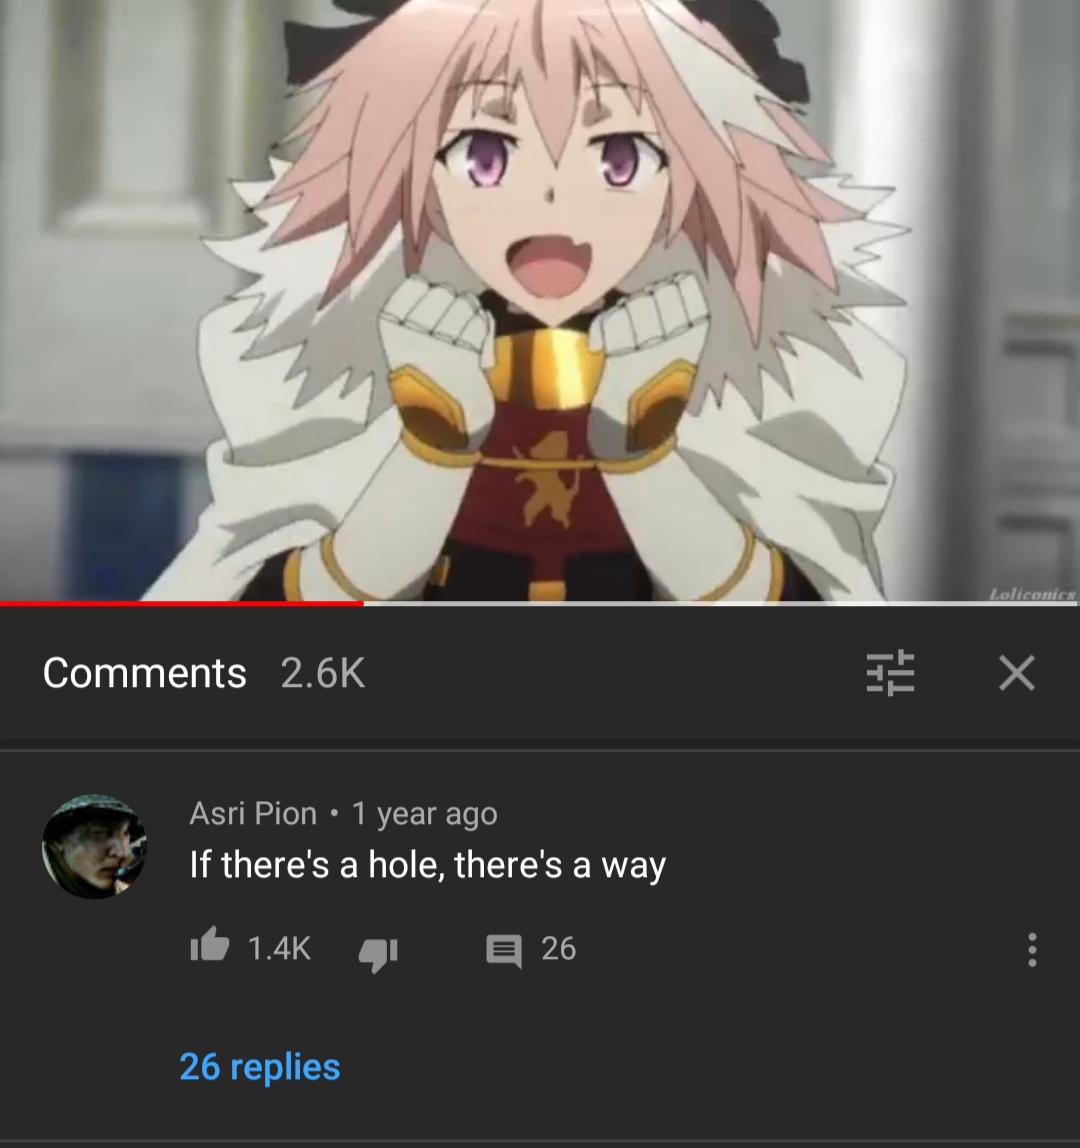 Anime,  Anime Memes Anime,  text: Comments 2.6K Asri Pion • 1 year ago If there's a hole, there's a way 1.4K A 26 26 replies 